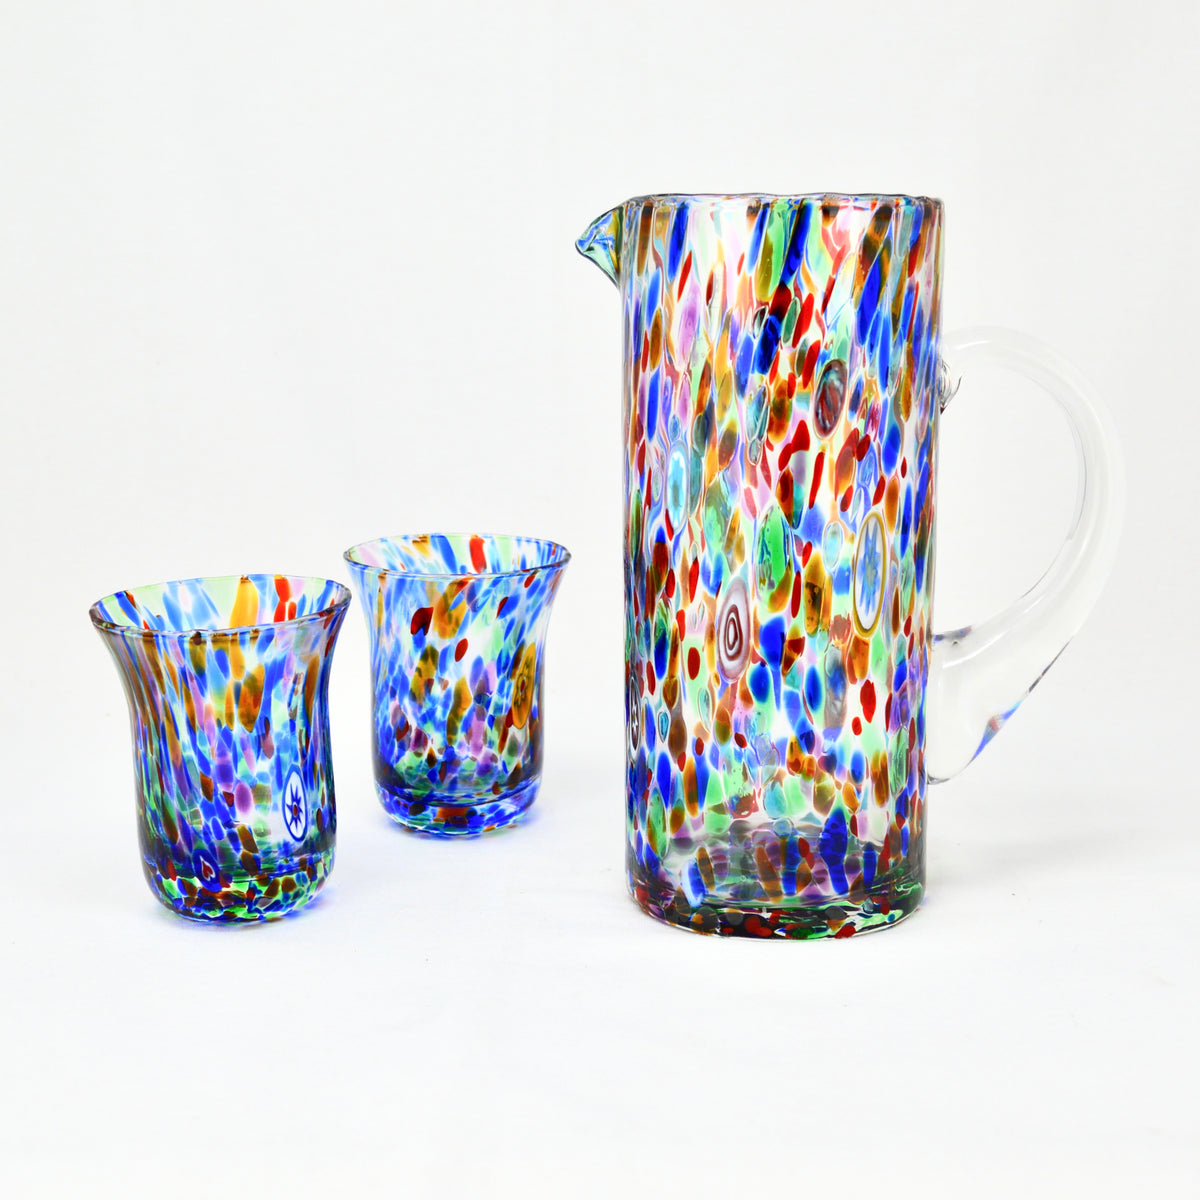 Murano Glass Confetti Drinking Glasses, Pitcher, Made in Italy - My Italian Decor